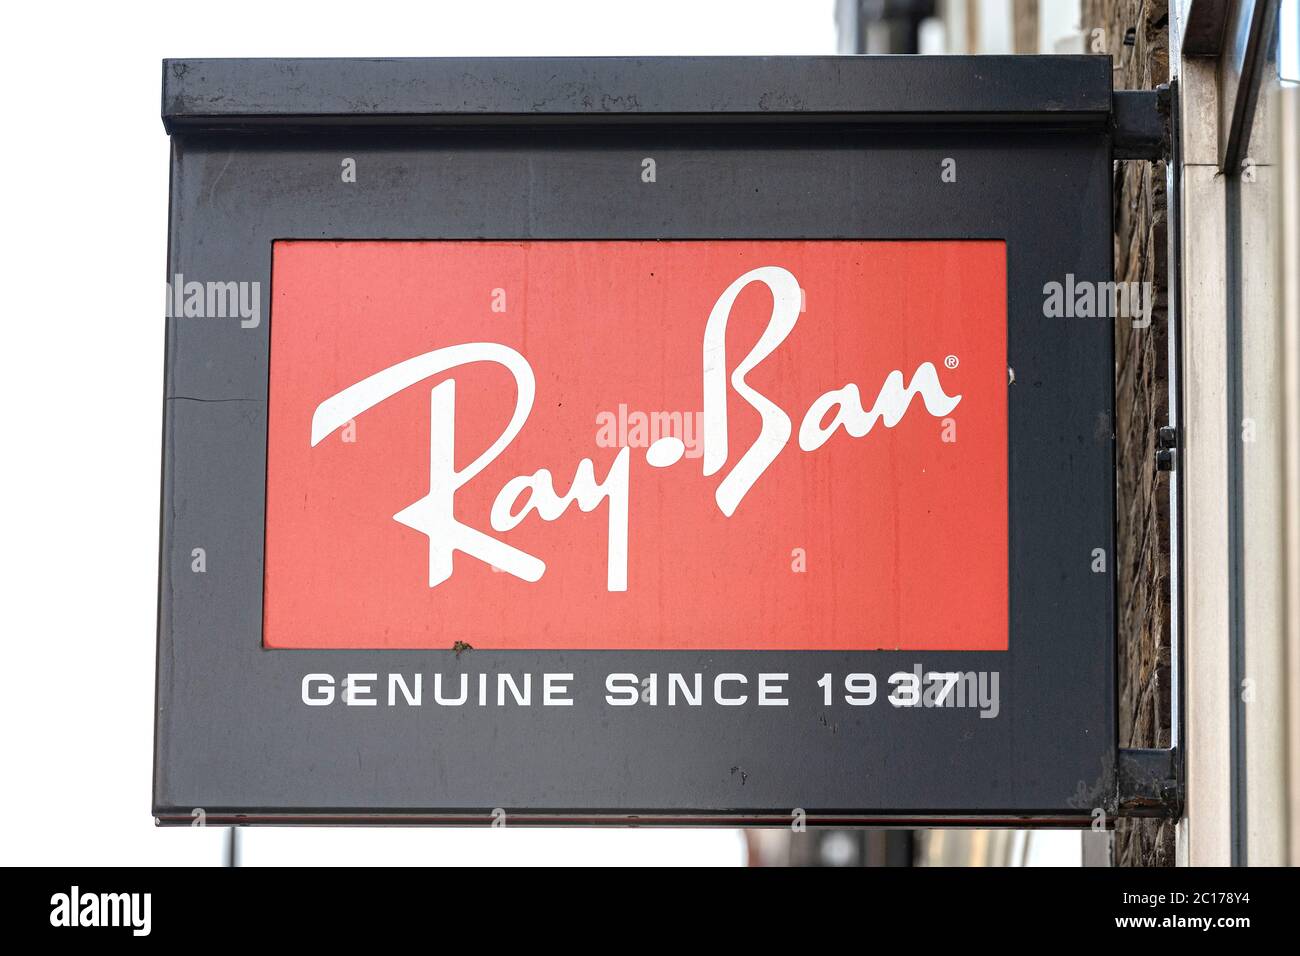 Ray Ban shop logo in Covent Garden Stock Photo - Alamy